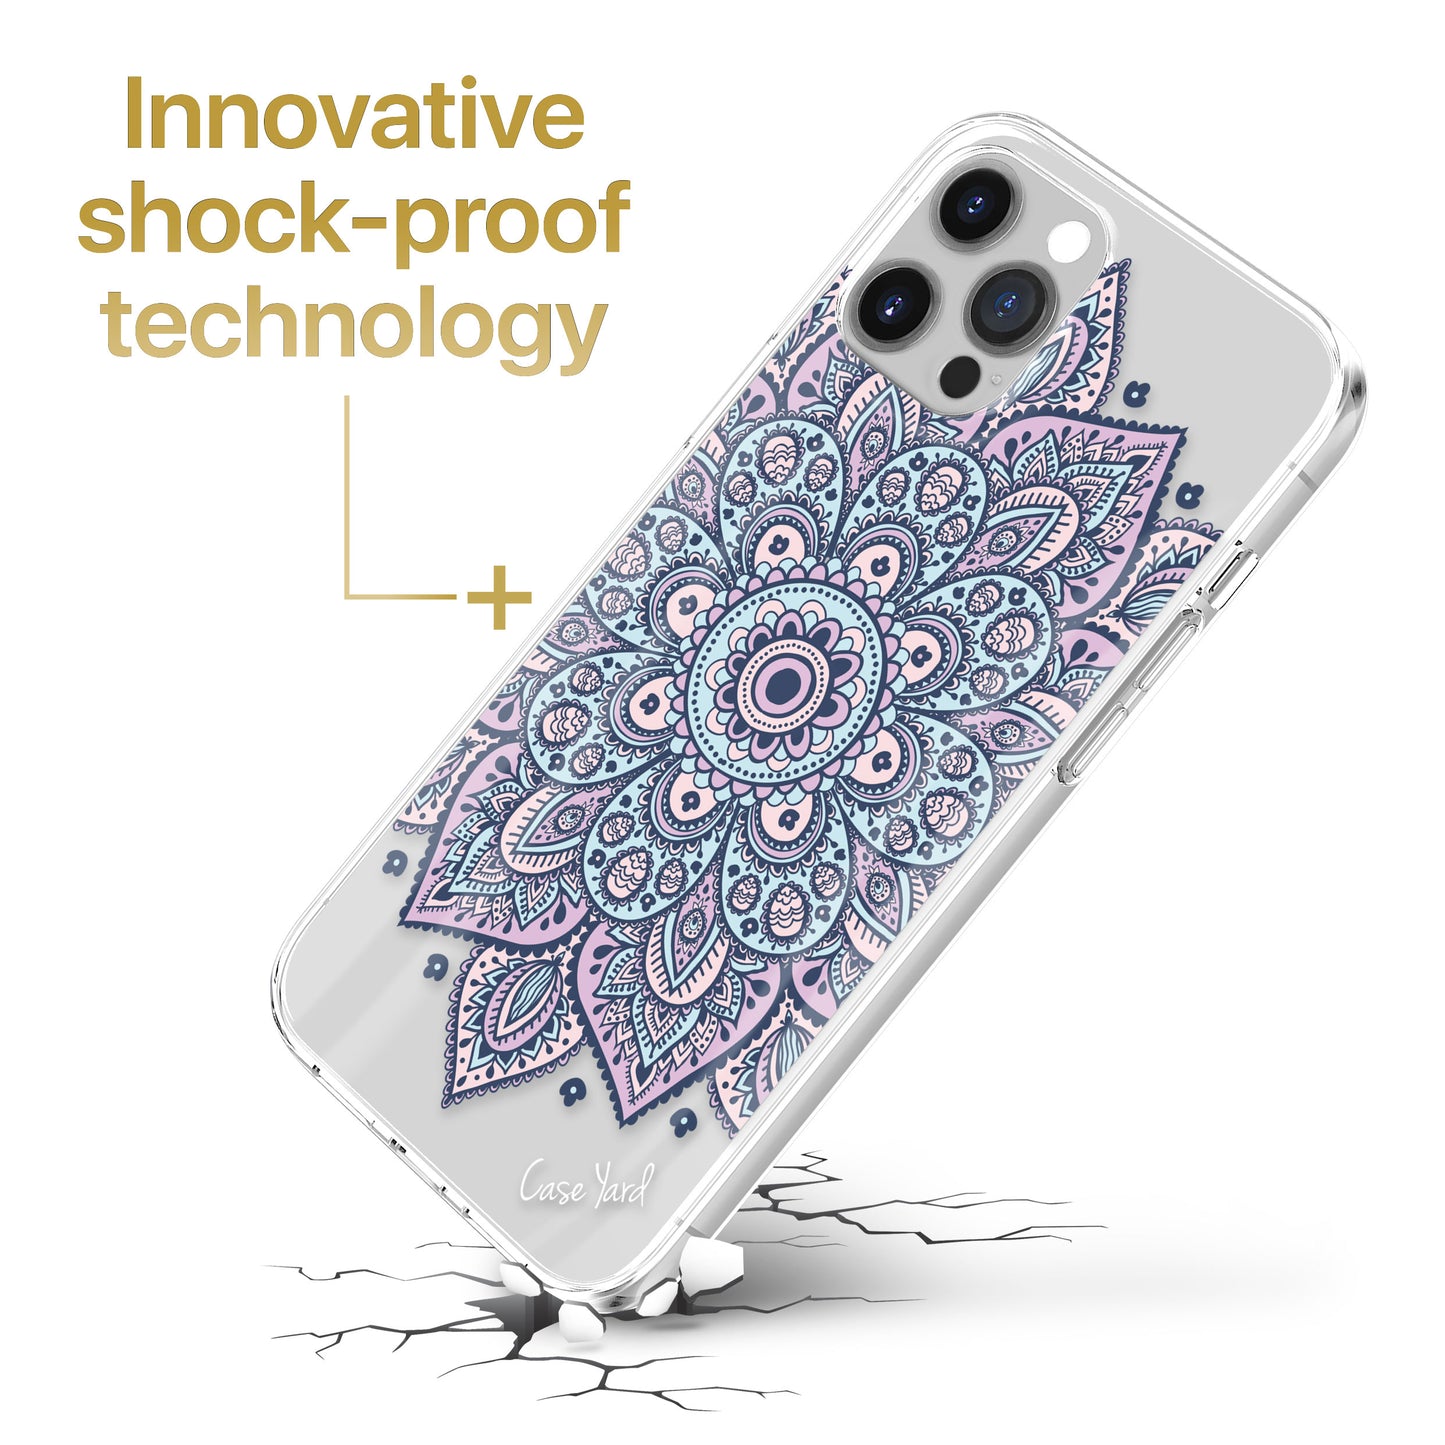 TPU Clear case with (Dakota Mandala) Design for iPhone & Samsung Phones